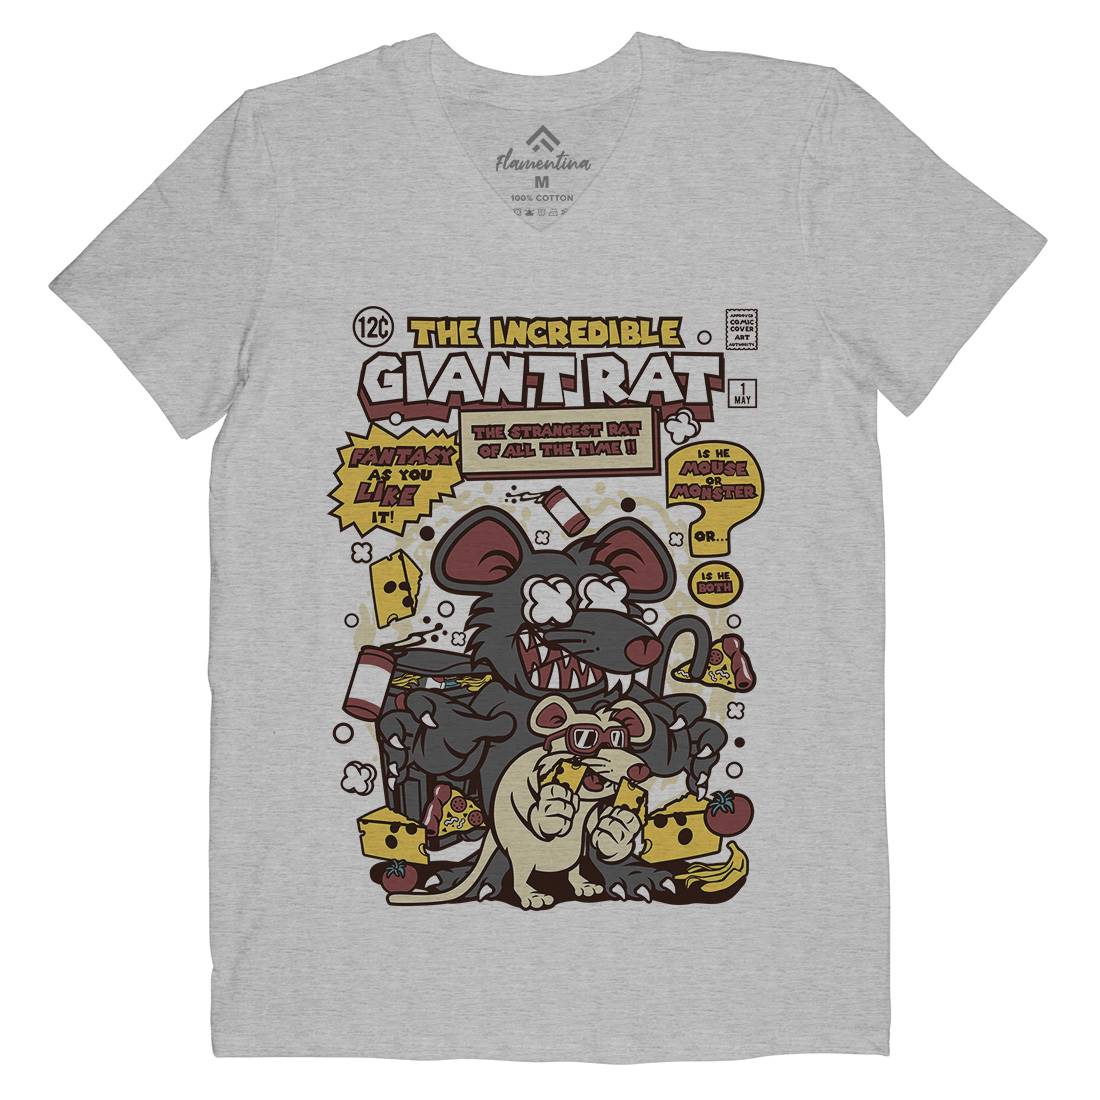 The Incredible Giant Rat Mens Organic V-Neck T-Shirt Animals C676